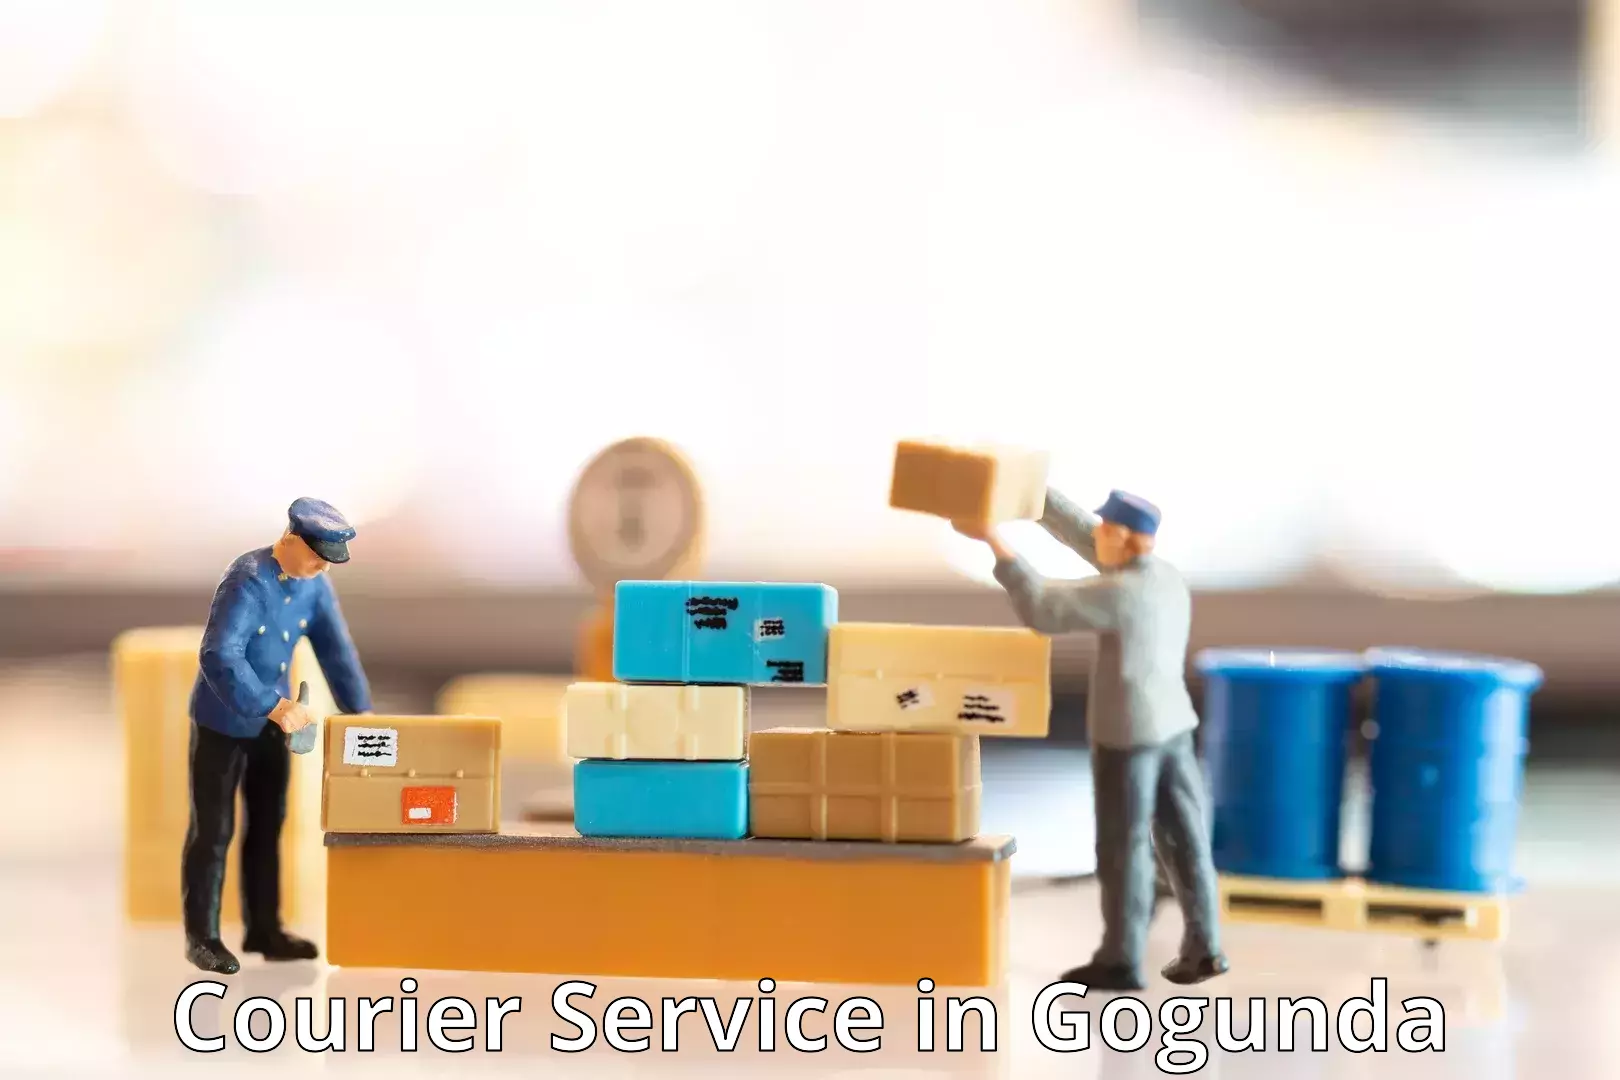 Courier service partnerships in Gogunda